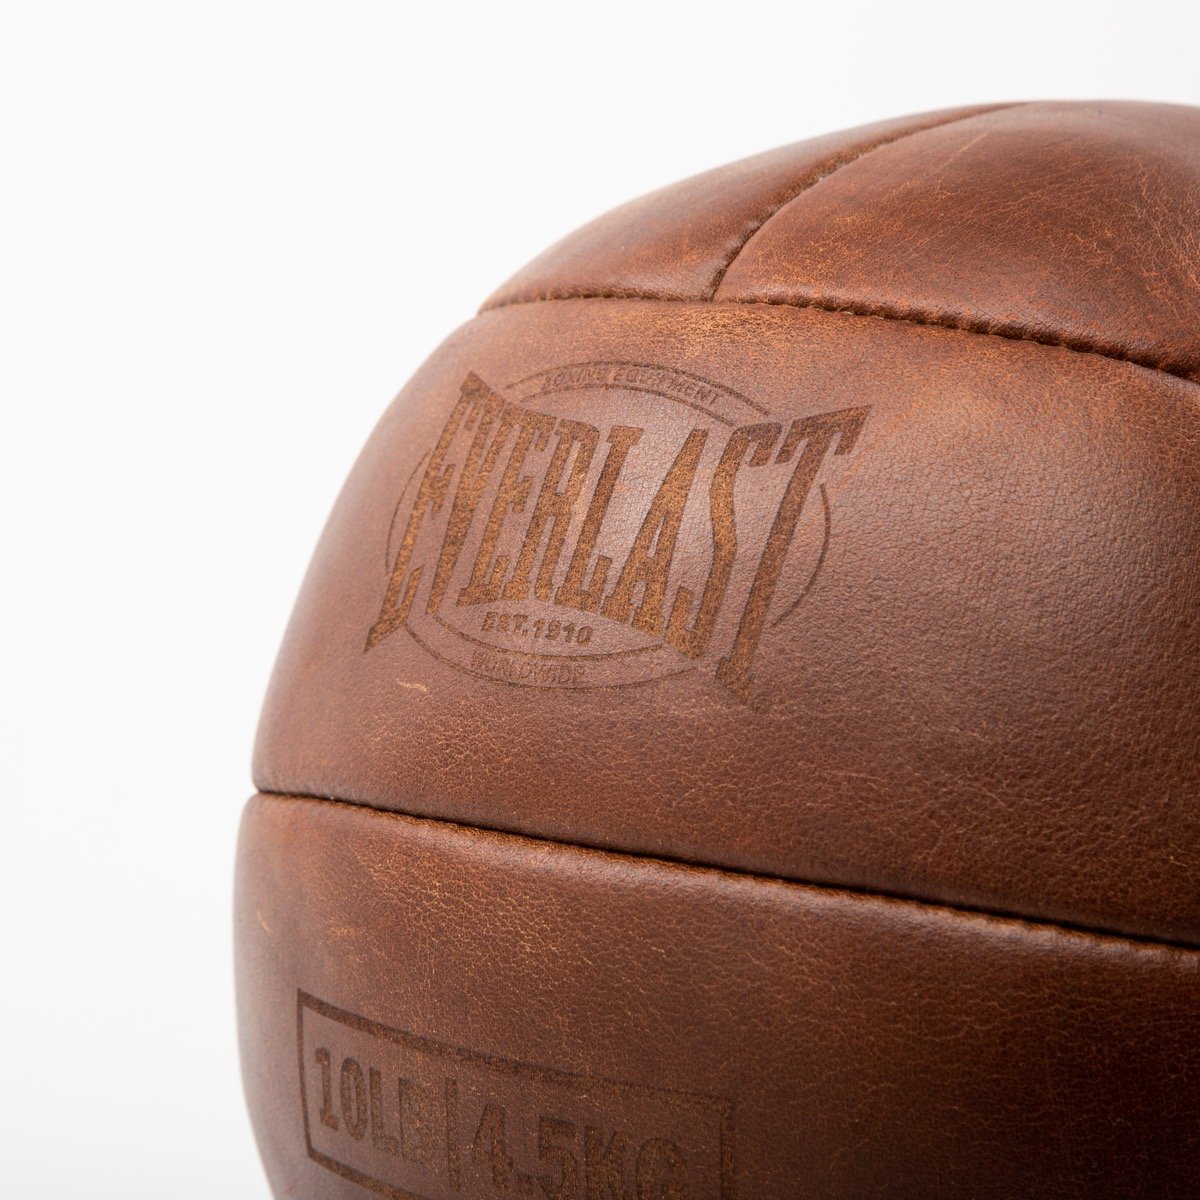 1910 10LB Medicine Ball - Everlast